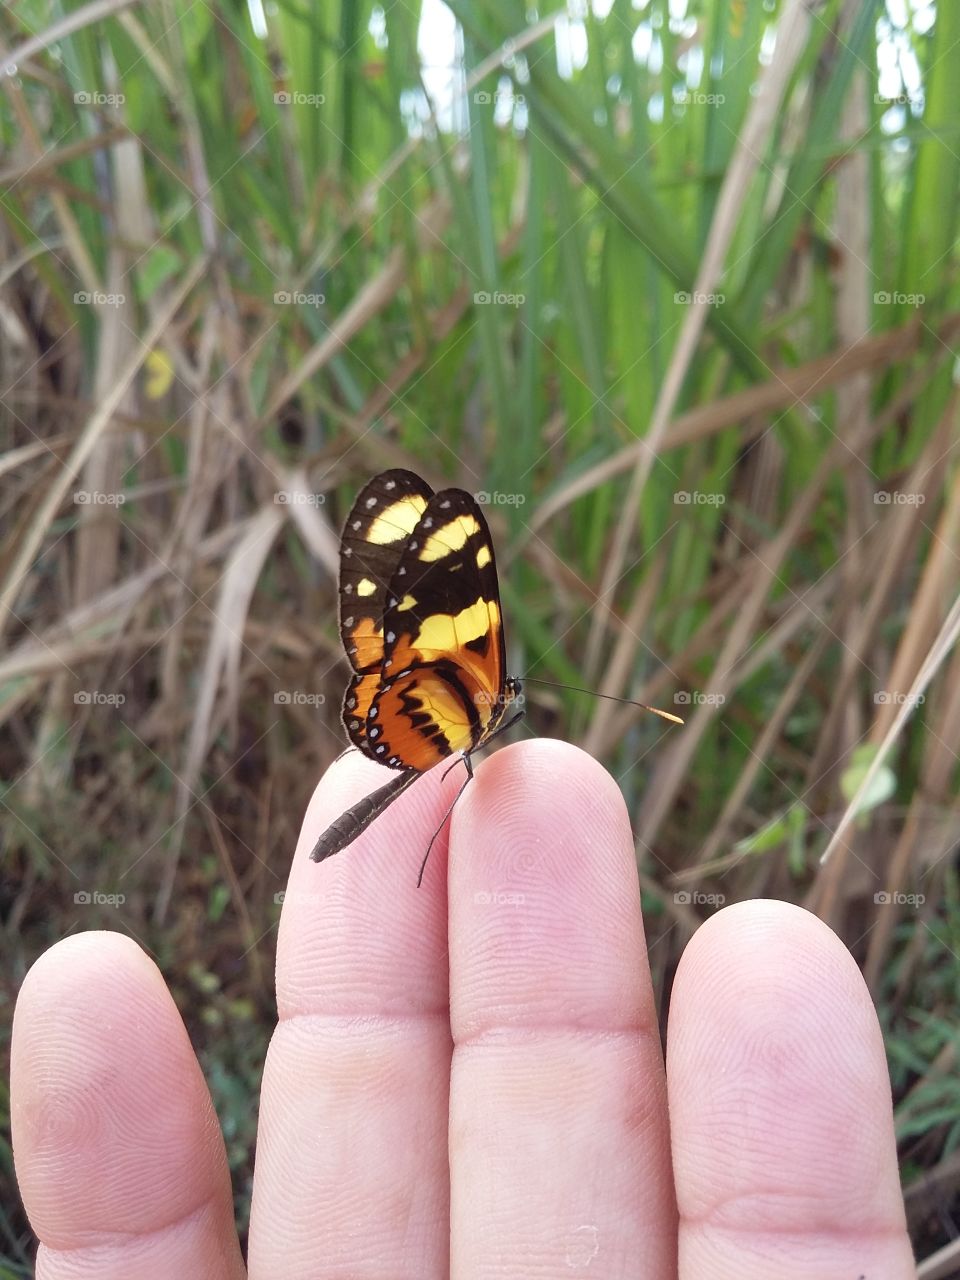 Butterfly very common in northeastern Brazil